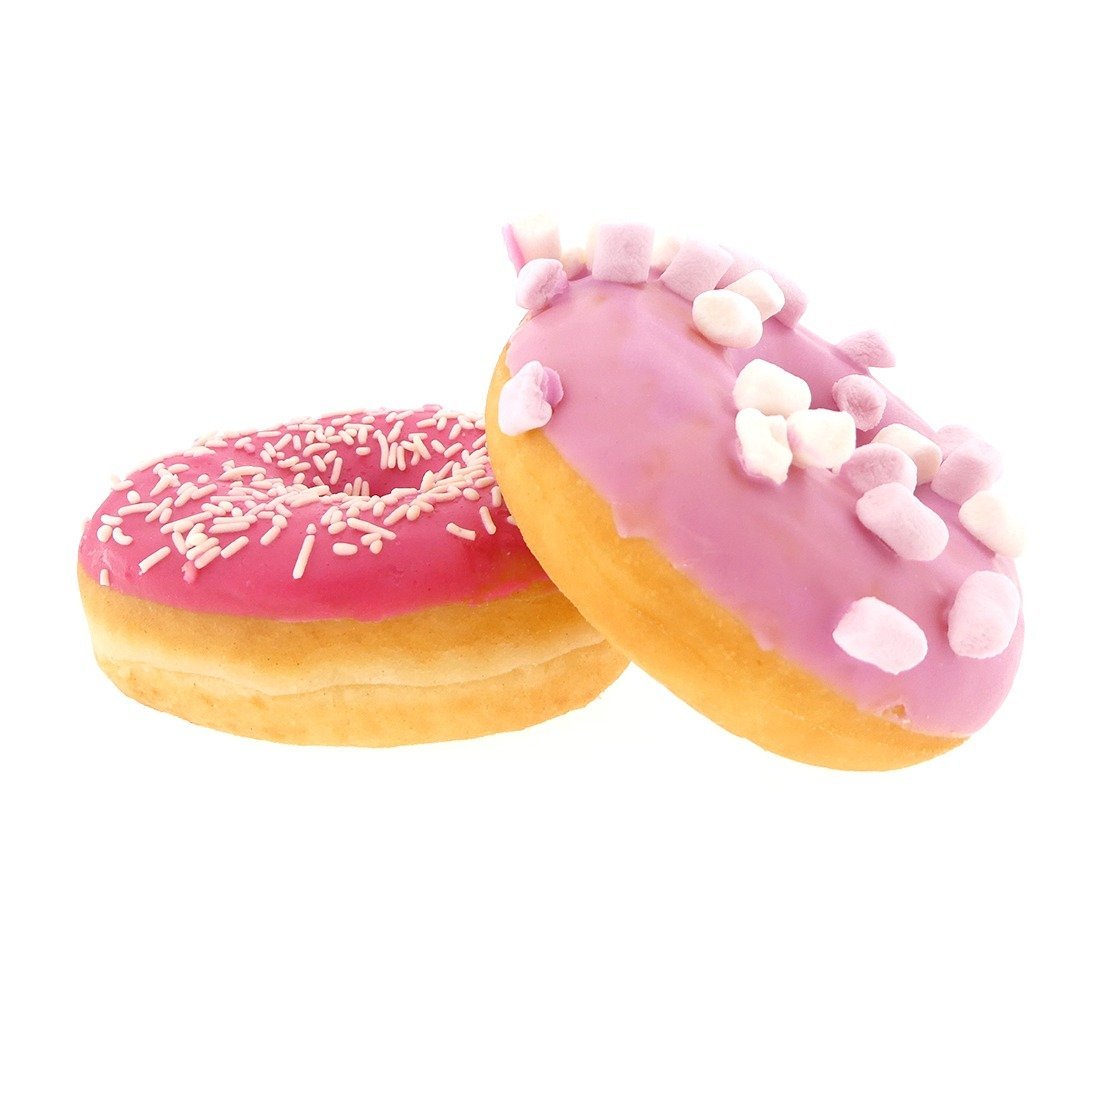 Productfotografie fotostudio food donut